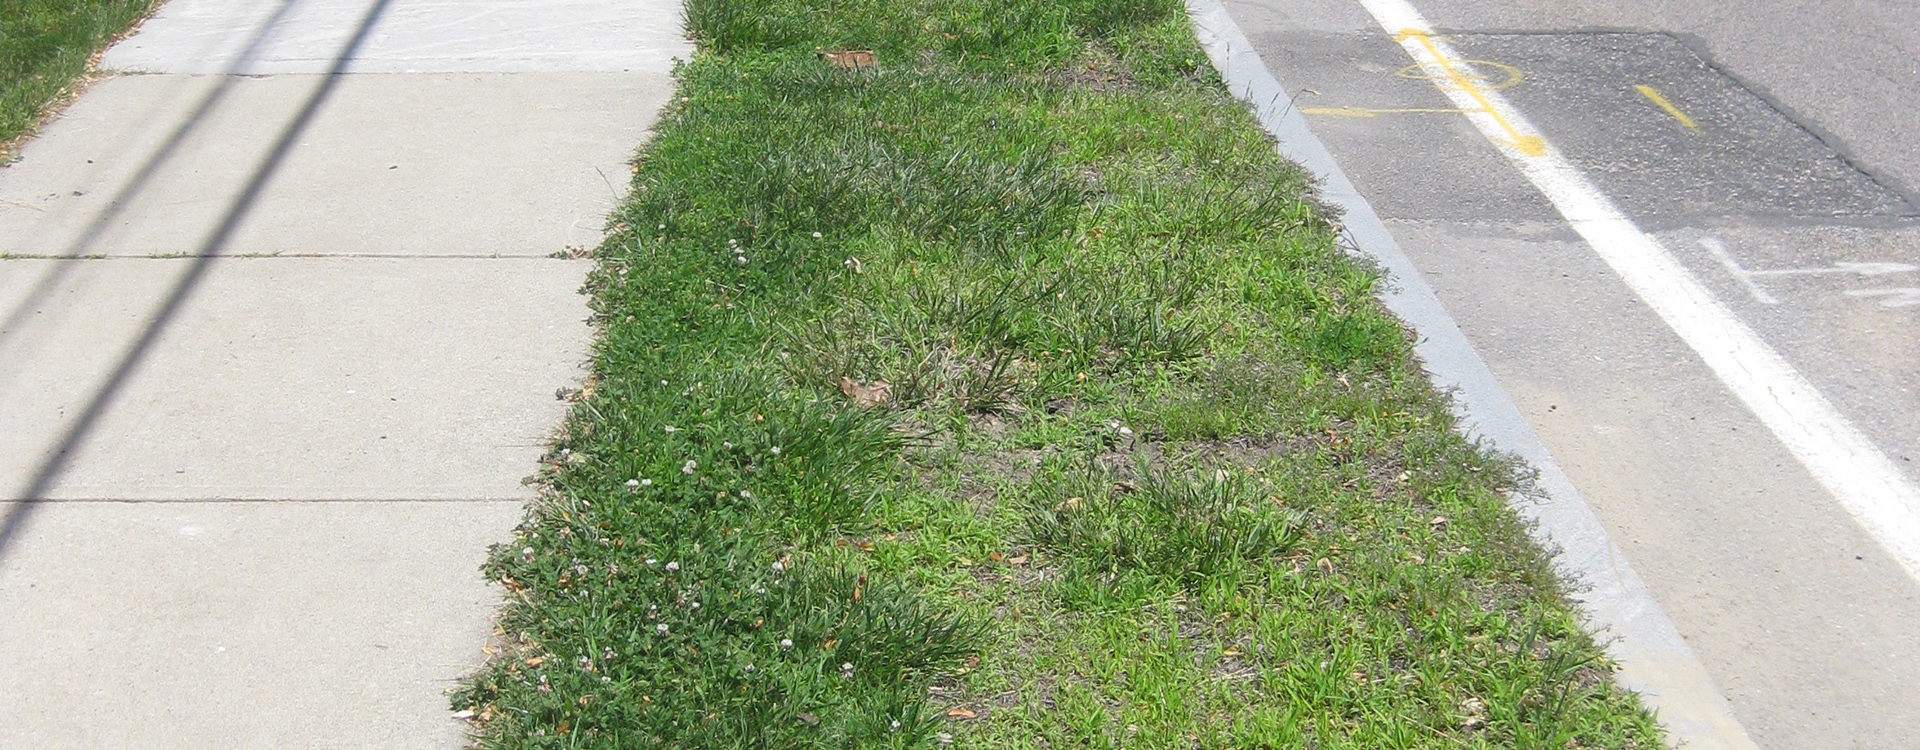 Turf grass in a street strip